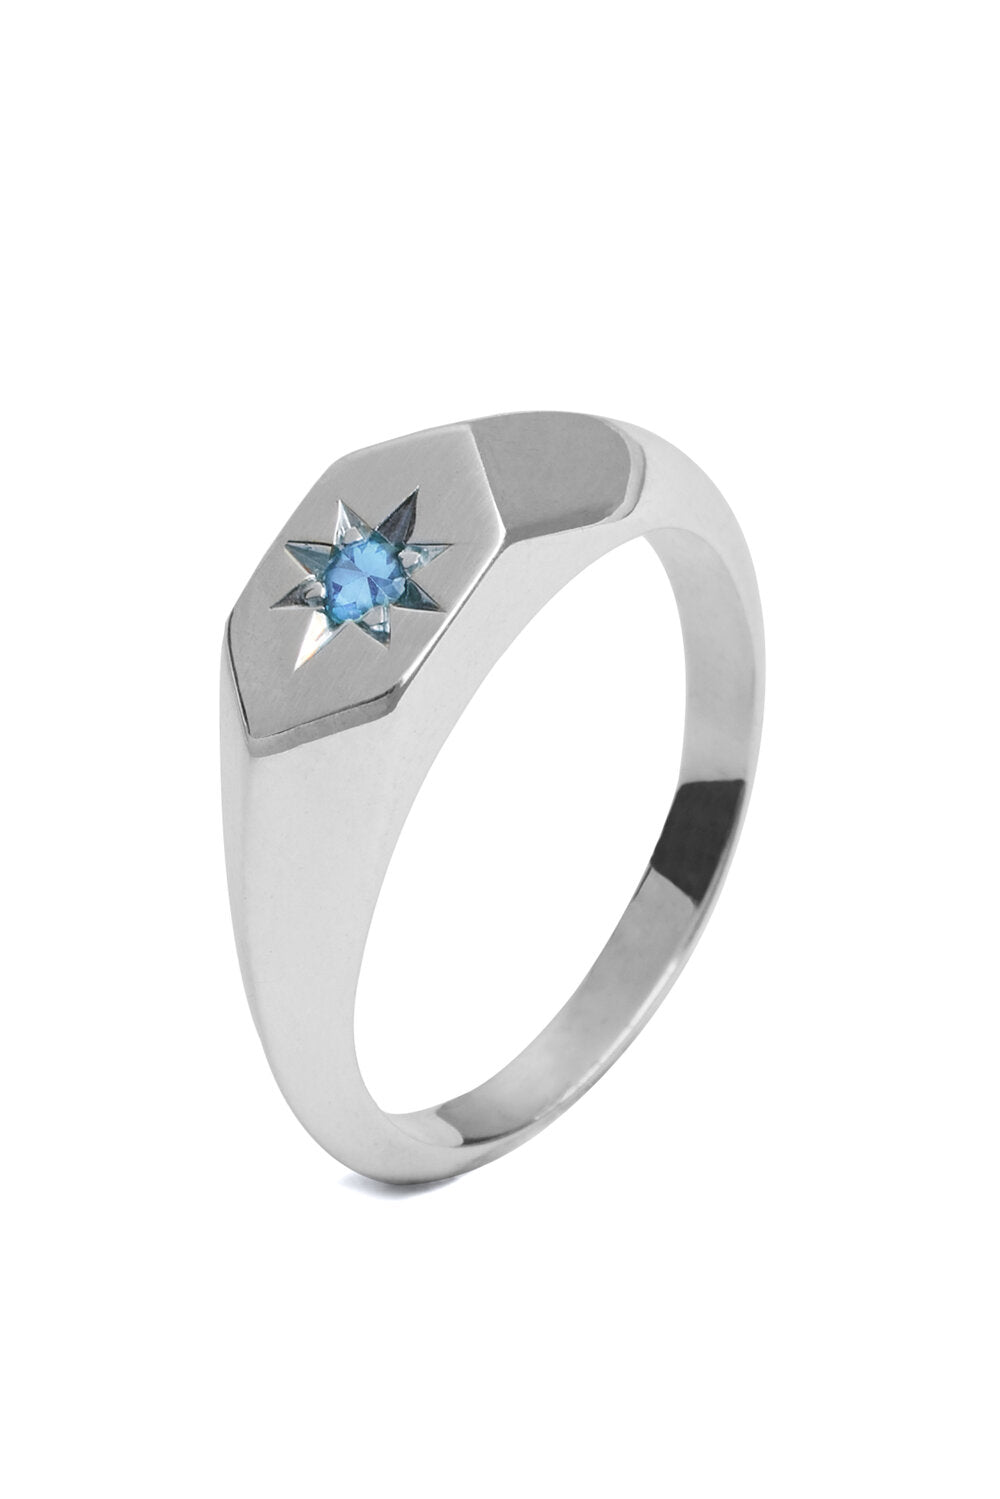 Starlight Blue Zircon Birthstone Signet Ring